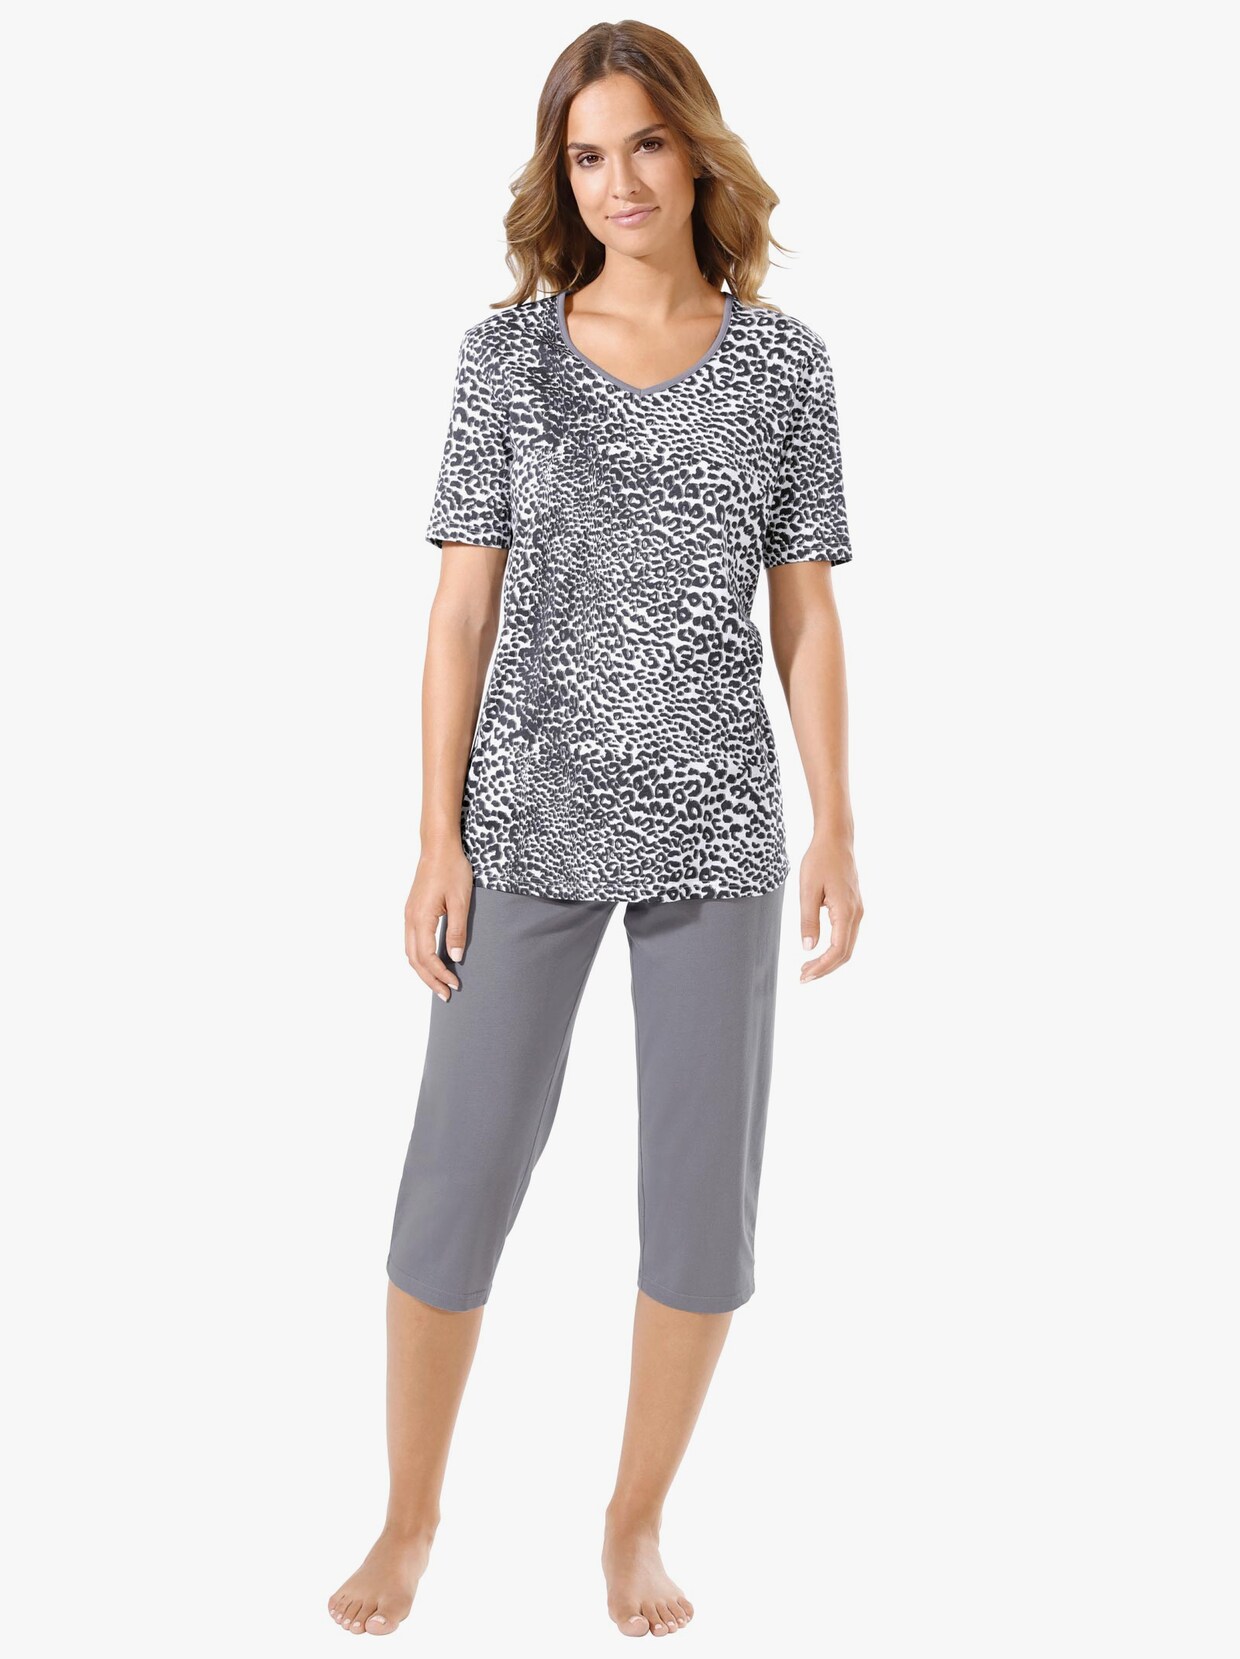 Capri-pyjama - wit/grijs bedrukt